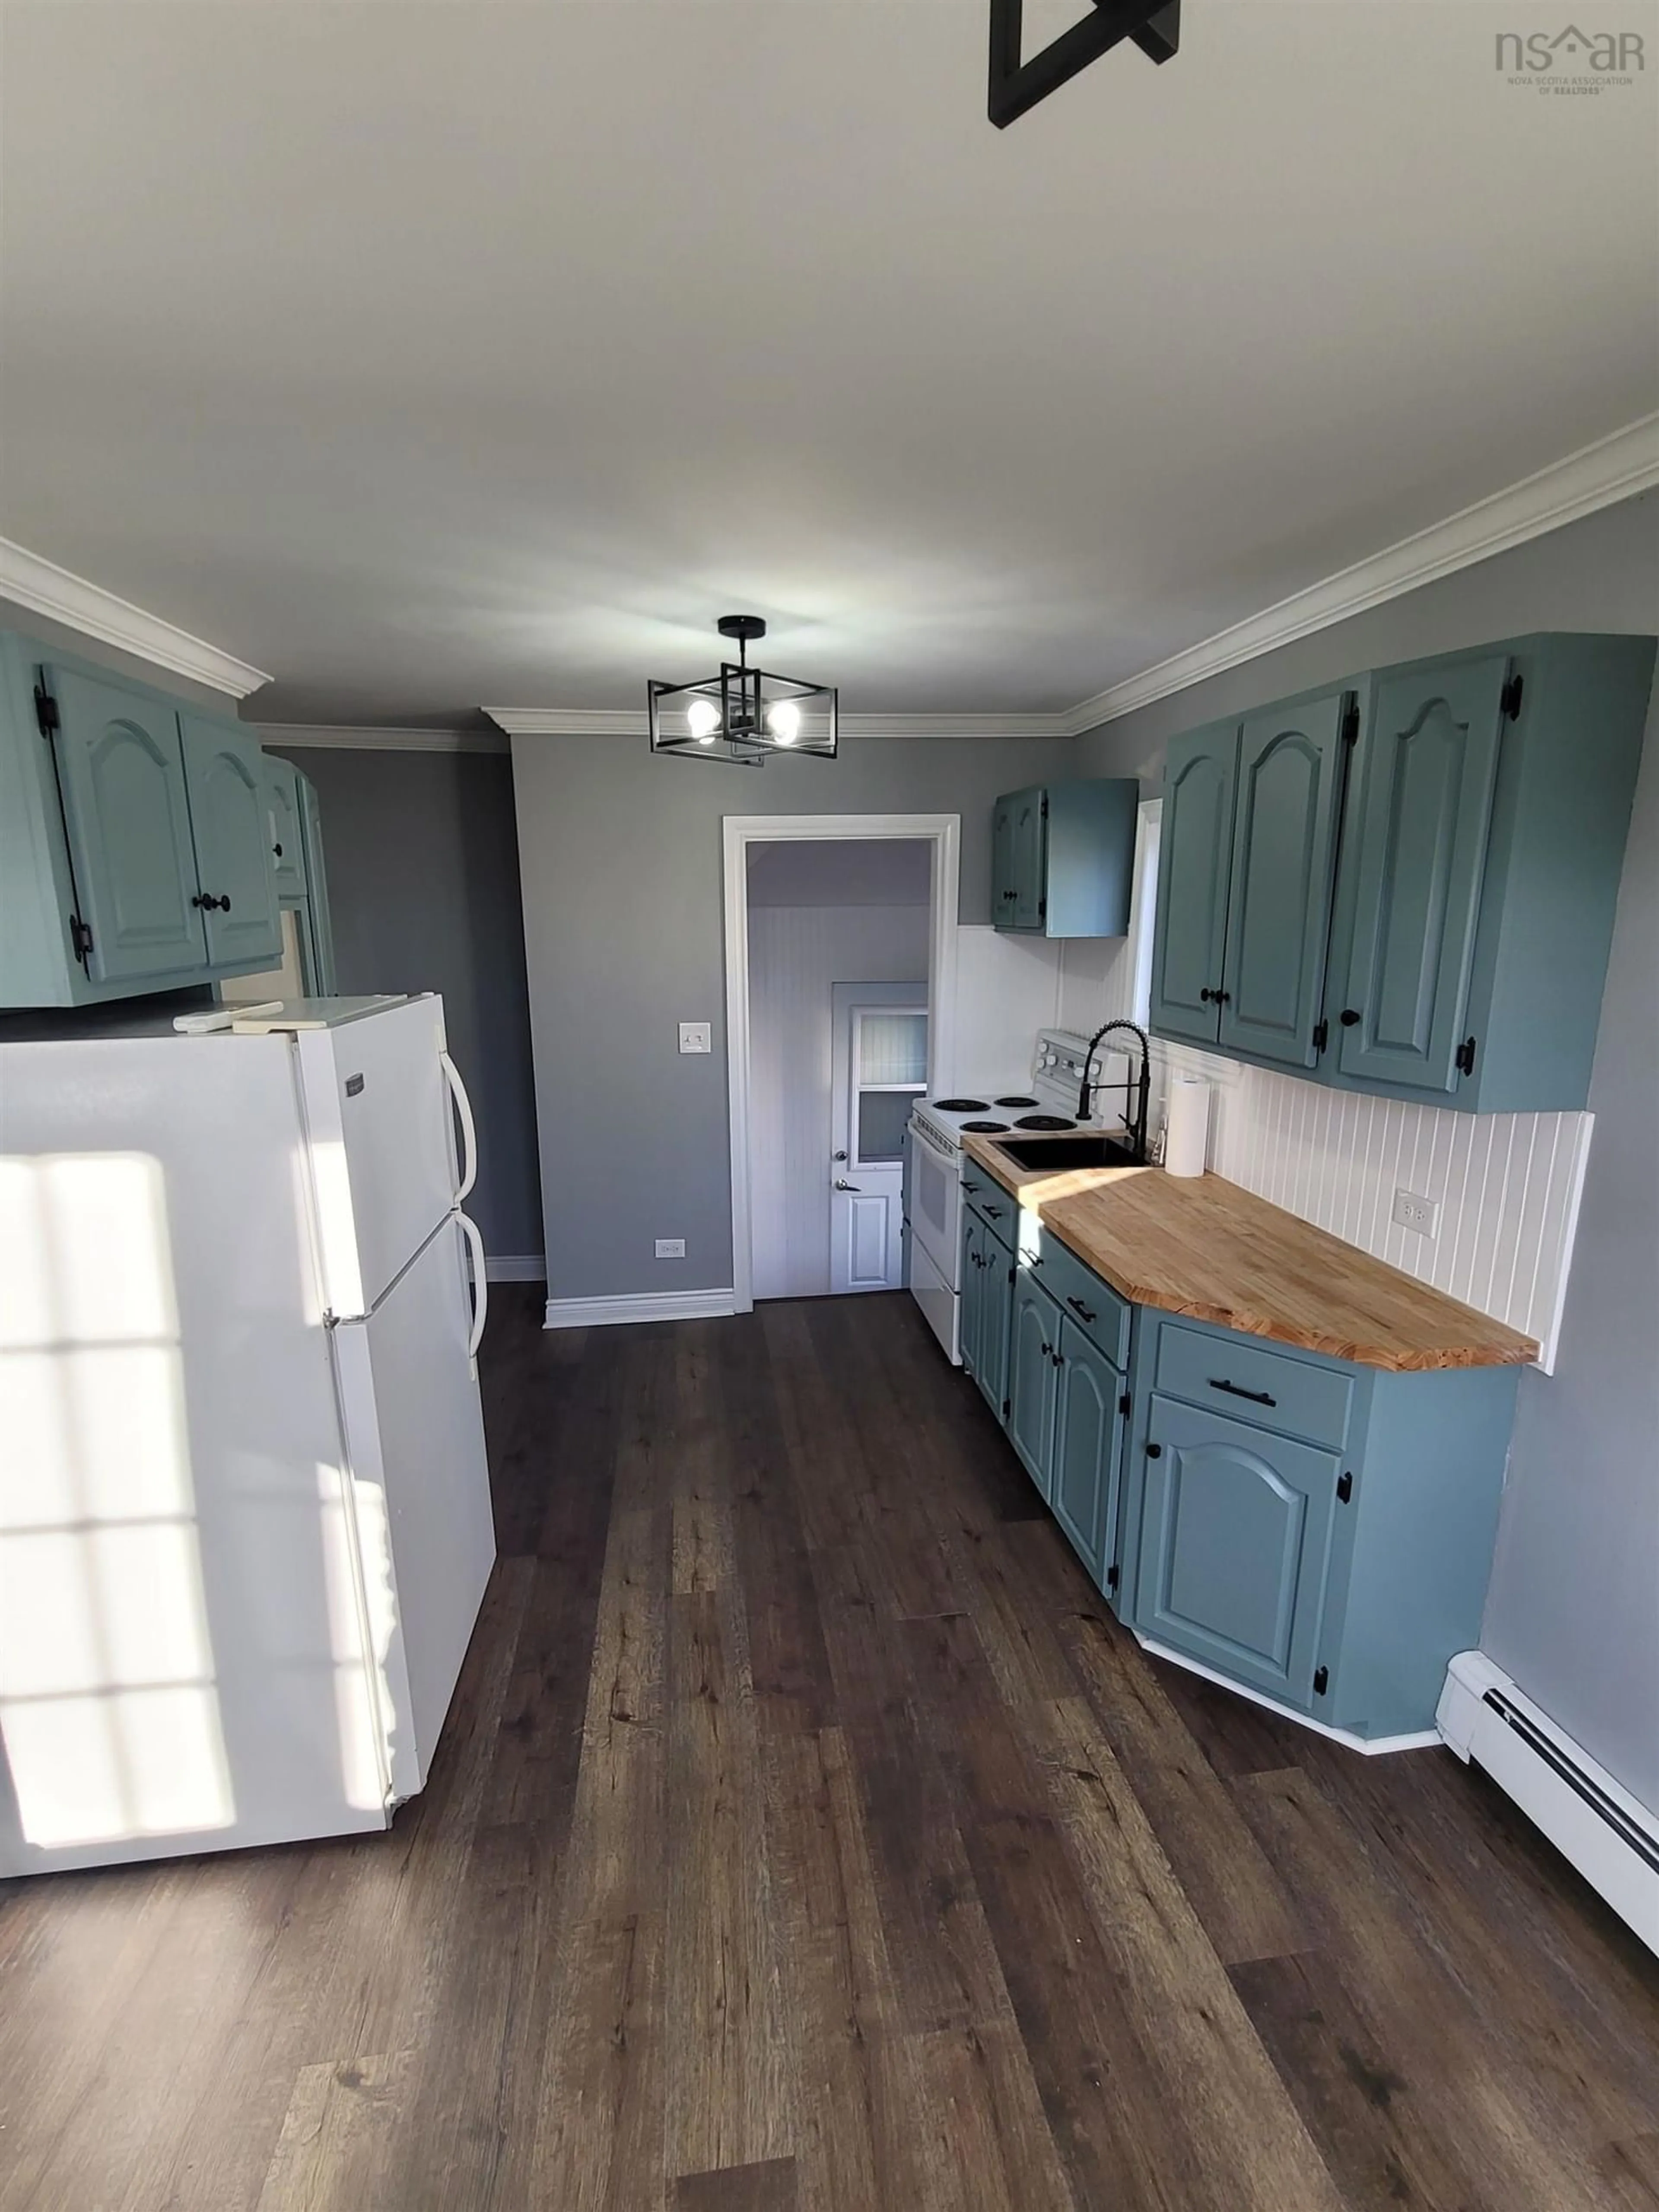 Standard kitchen for 9 Essex St, Glace Bay Nova Scotia B1A 5H3